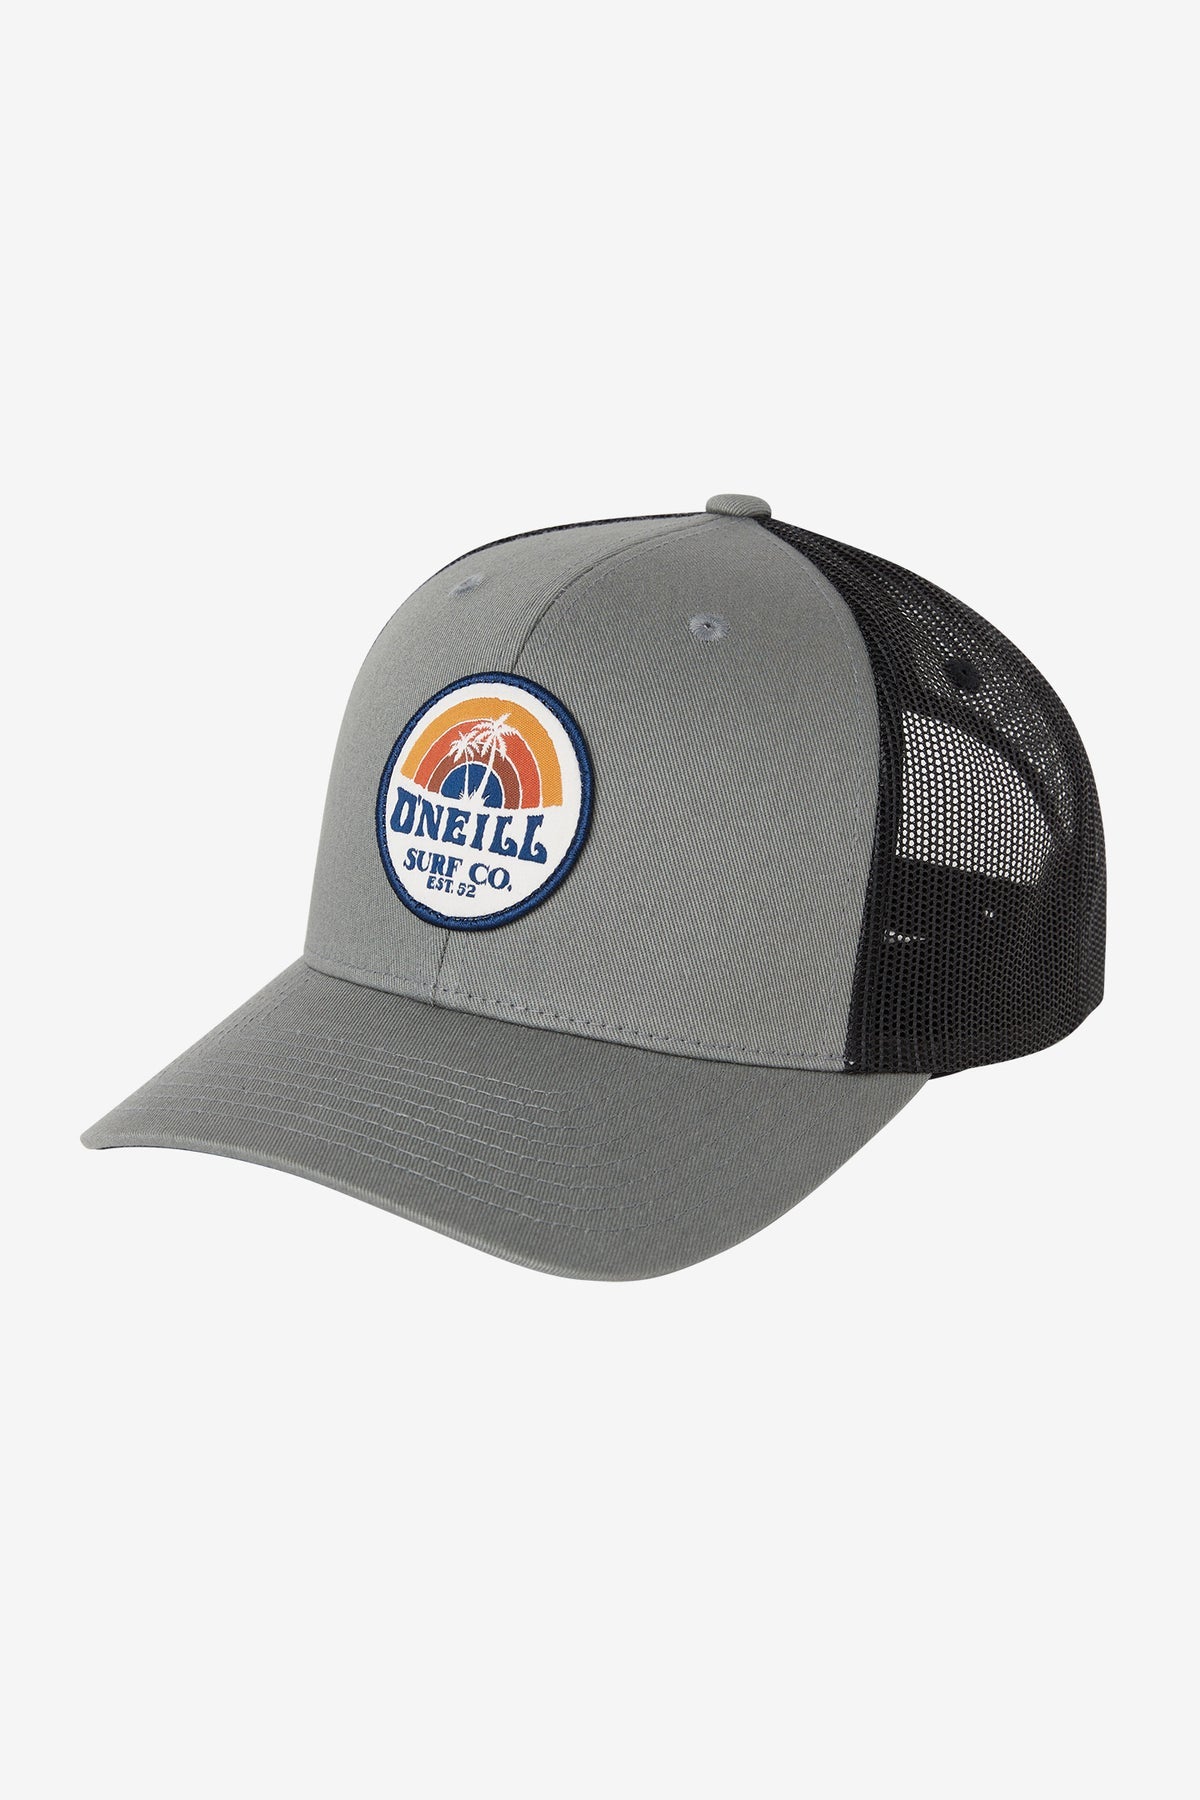 O'Neill Stach Trucker Hat